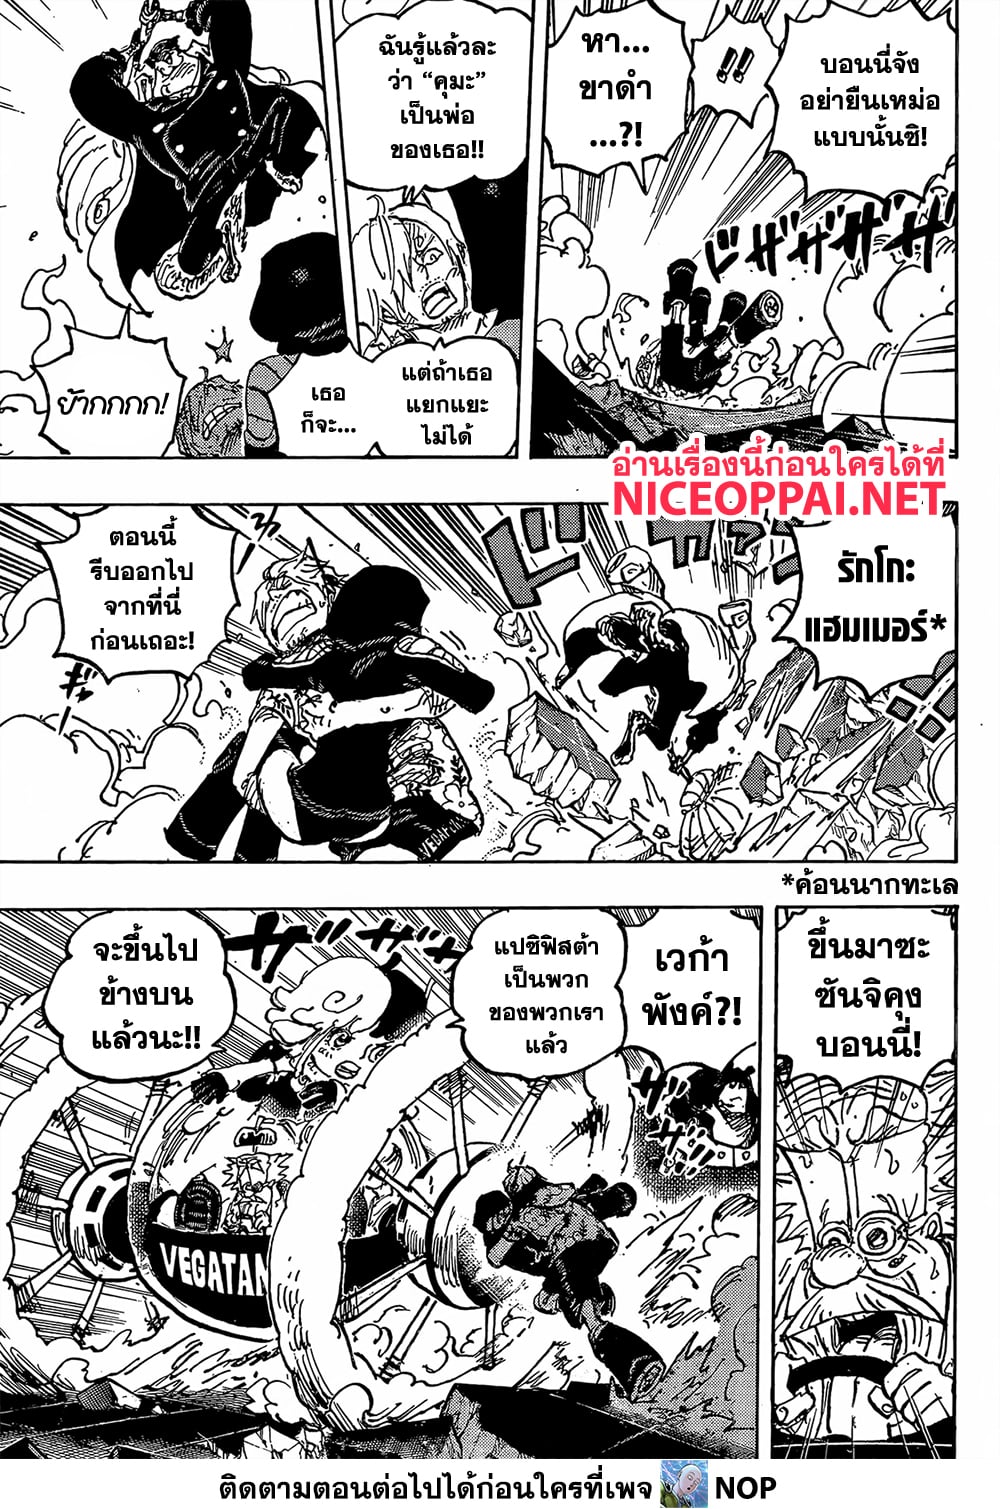 One Piece 1094-เซนต์ เจการ์เซีย แซมเทิร์น แห่งห้าผู้เฒ่า - เทพนักรบแห่งวิทยาศาสตร์และกลาโหม